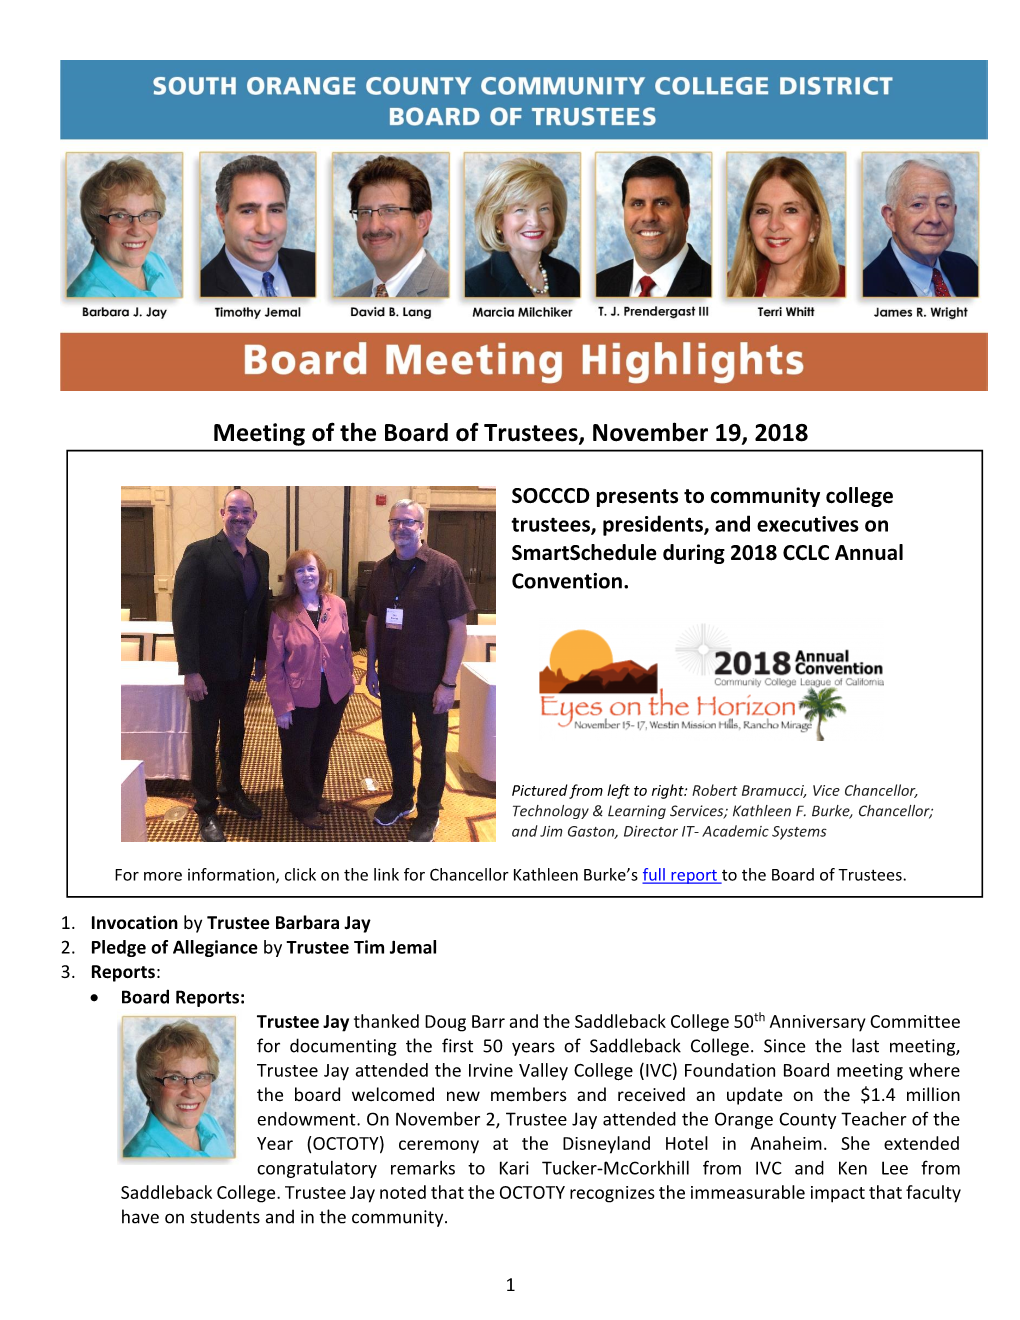 Meeting of the Board of Trustees, November 19, 2018